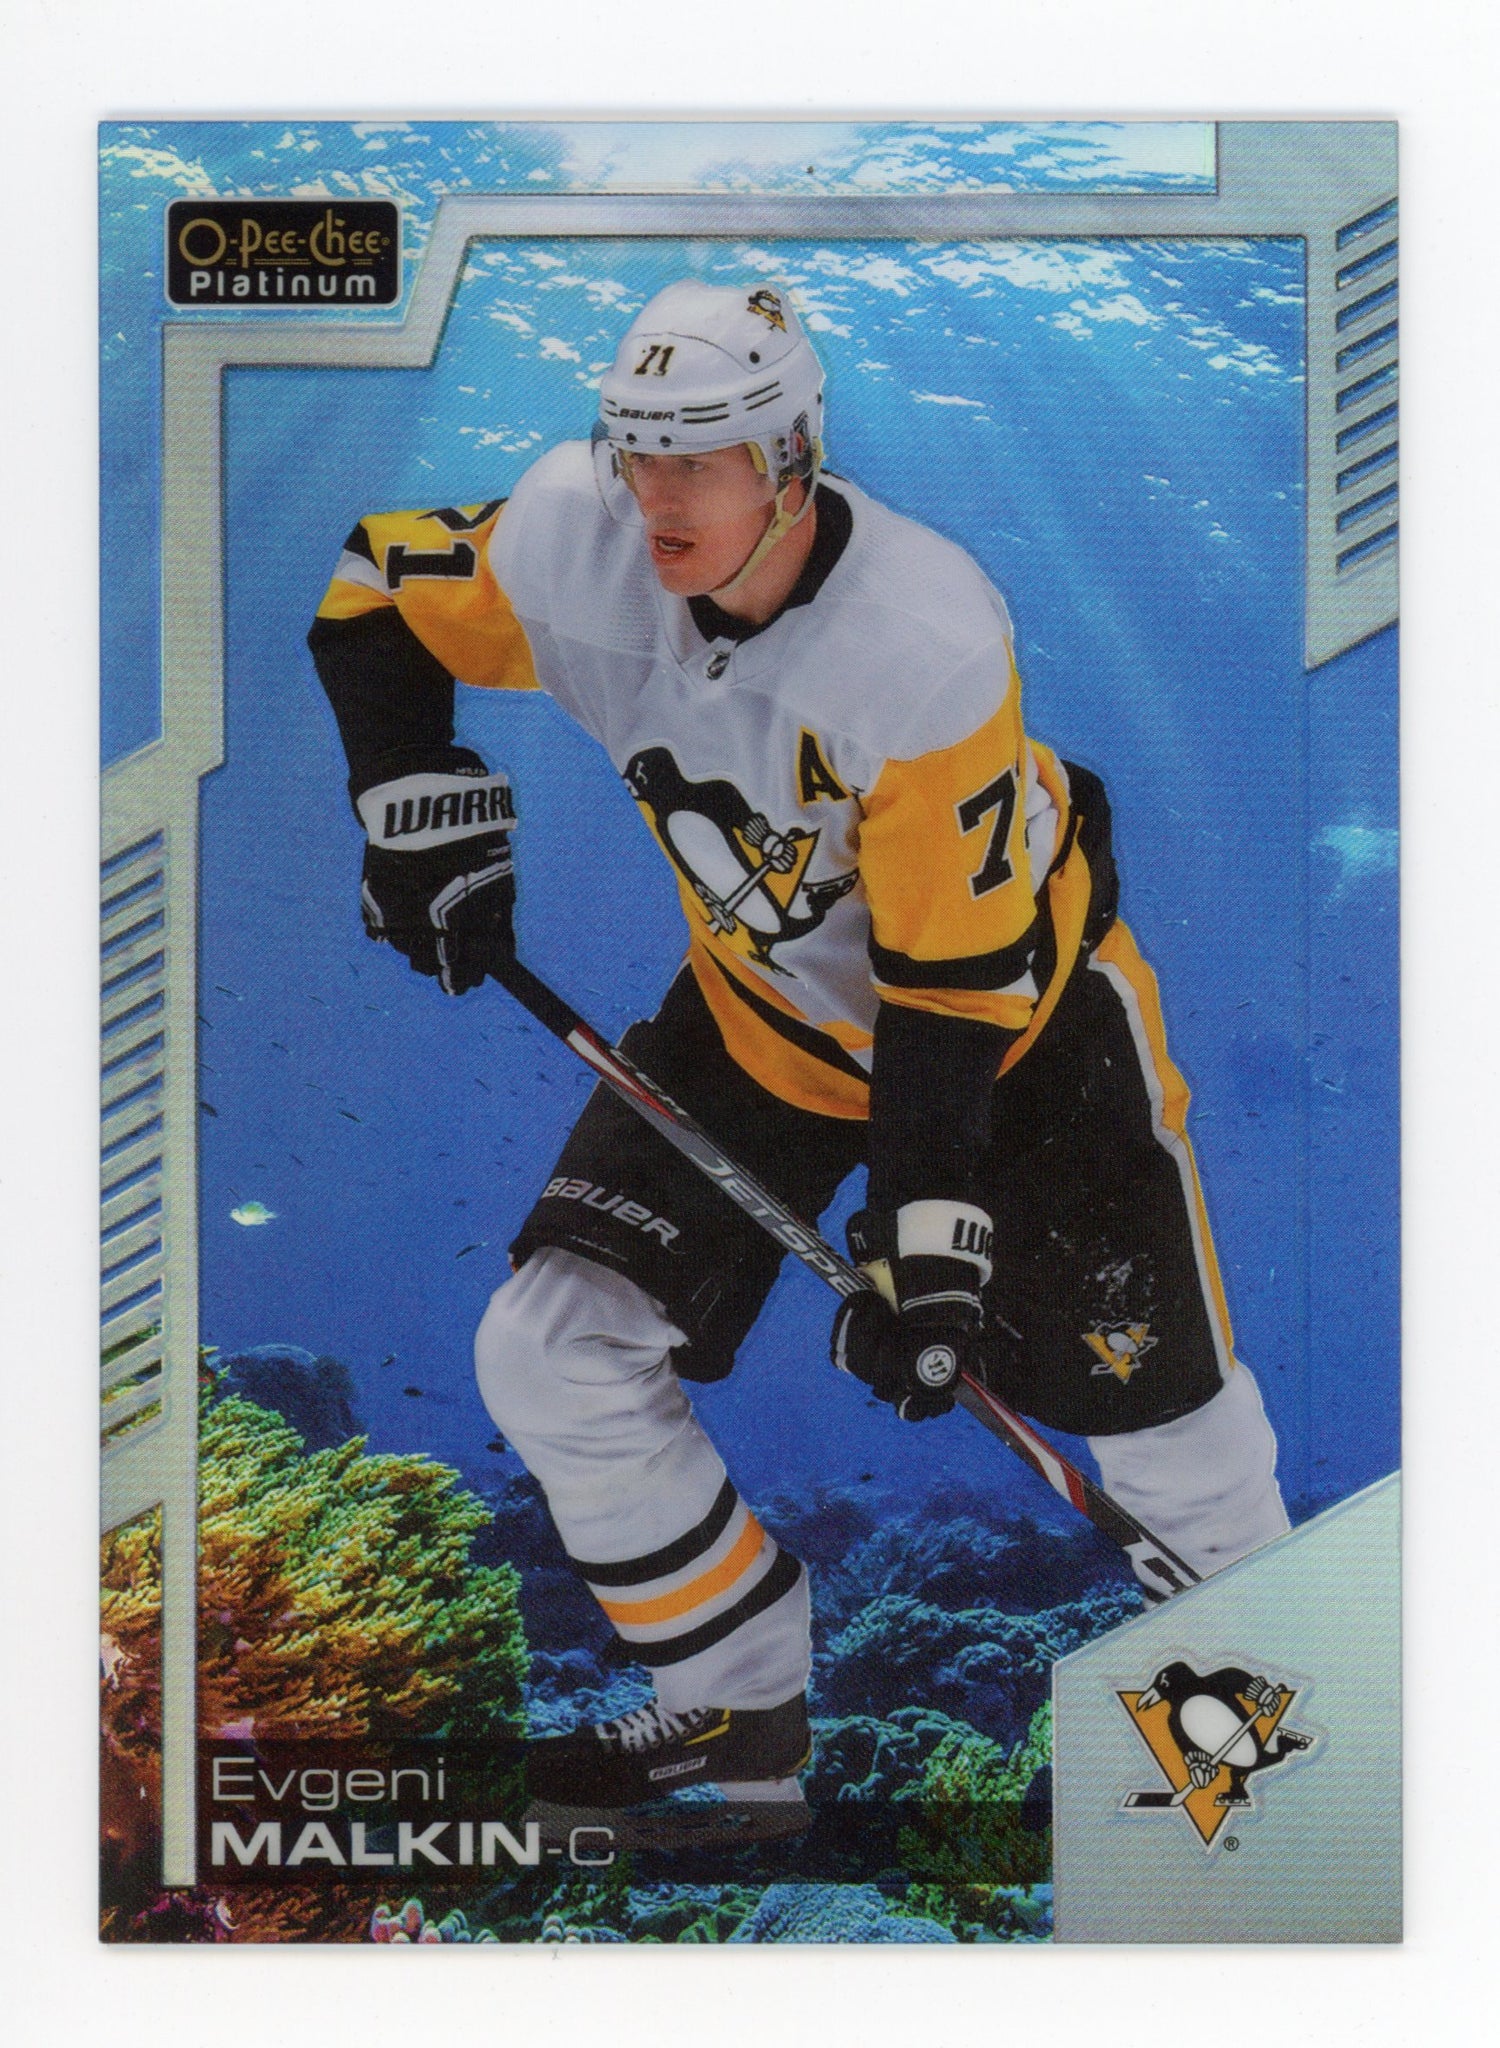 2020-2021 Evgeni Malkin Aquamarine #d /499 OPC Pittsburgh Penguins # 141